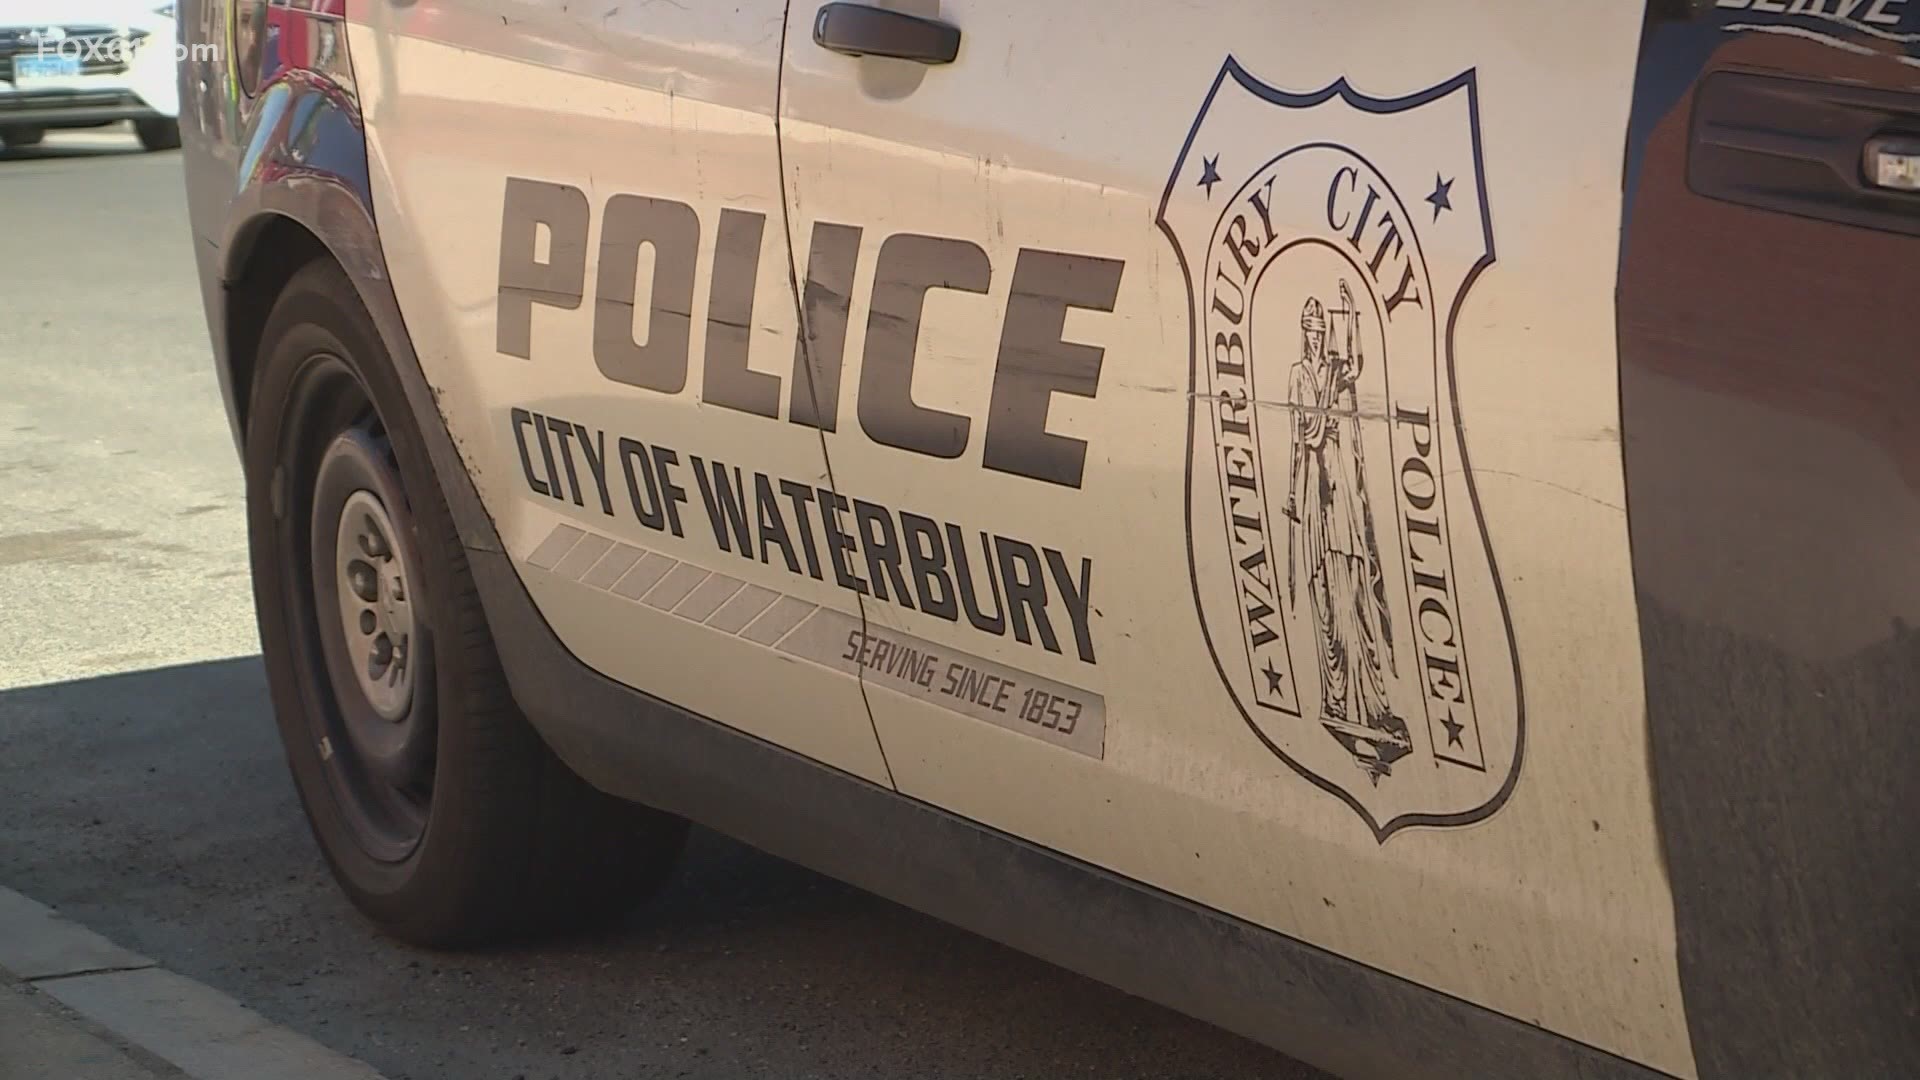 waterbury police blotter 2020